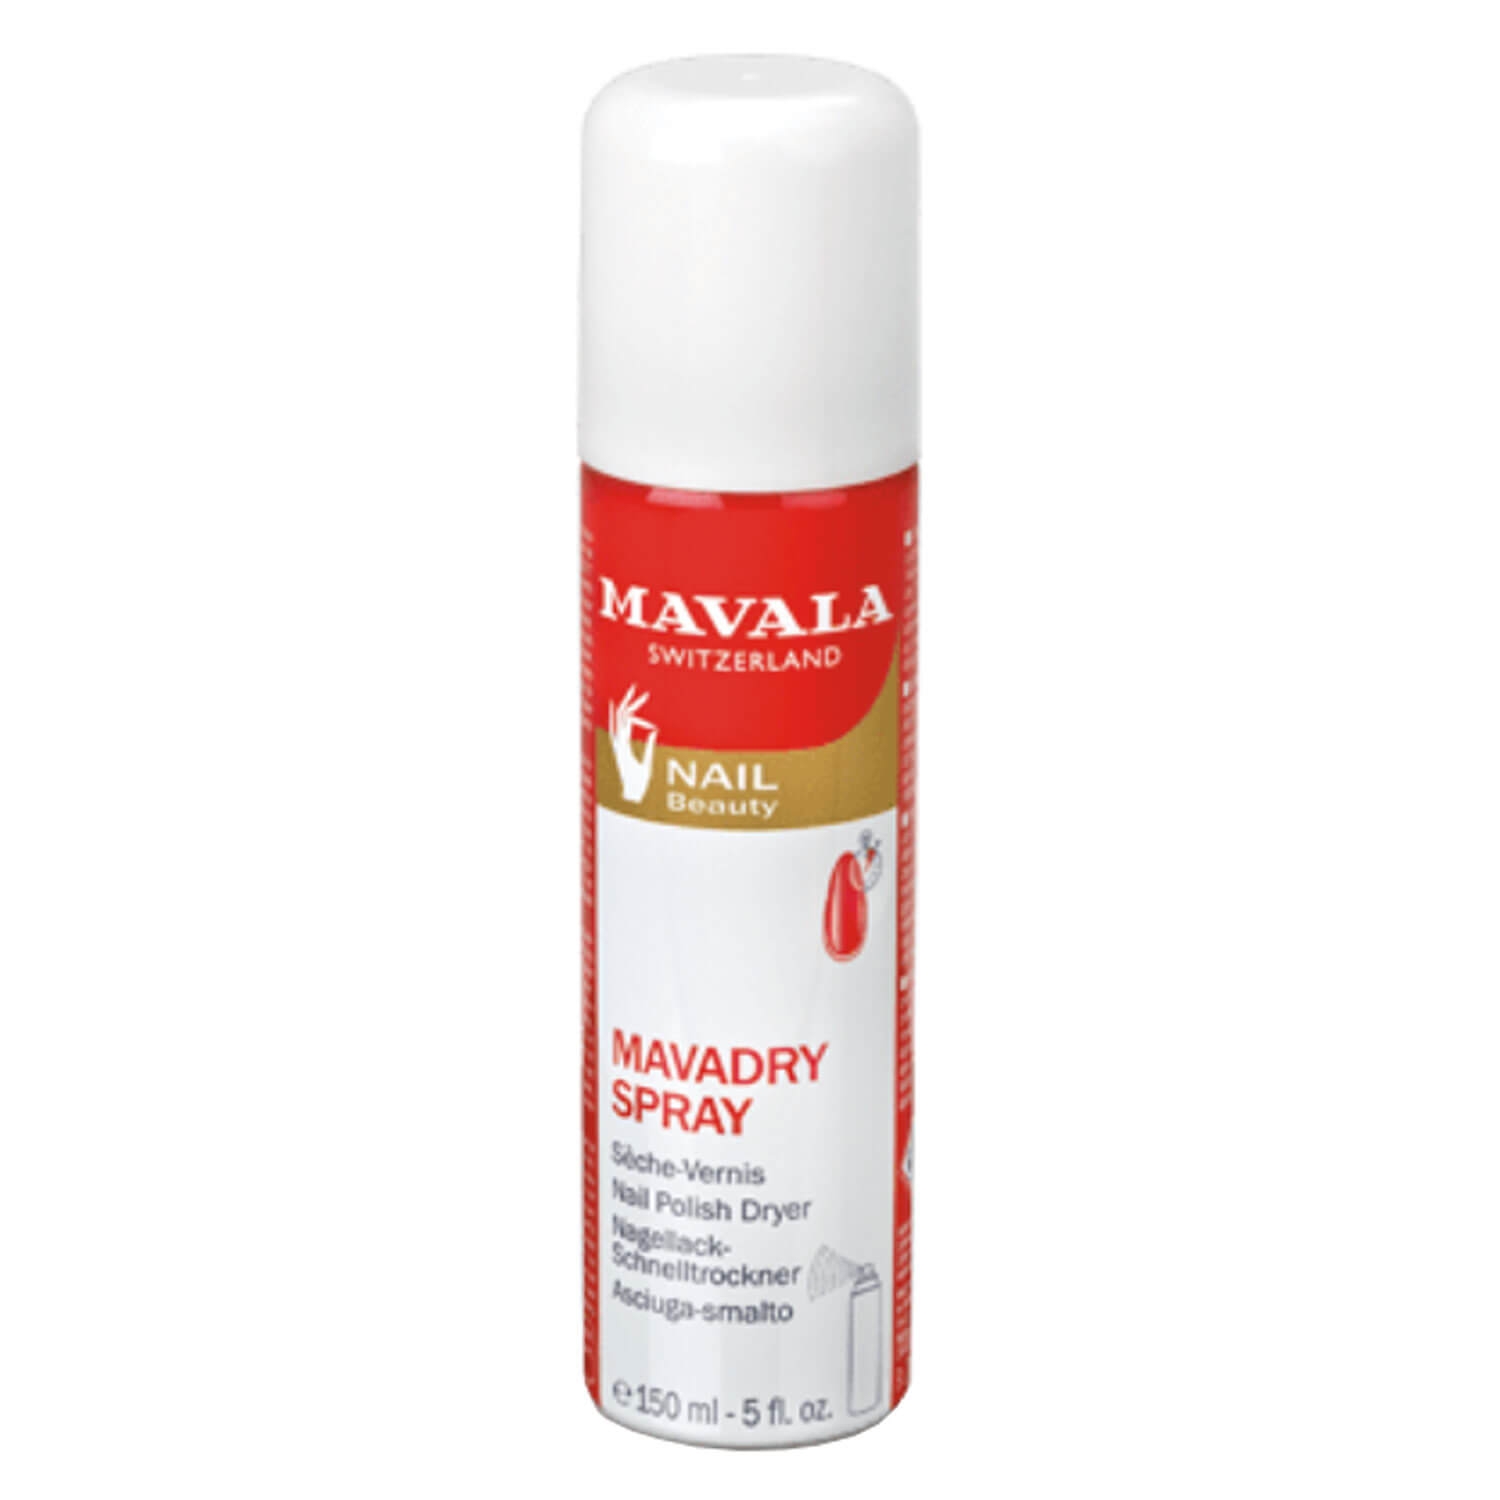 Produktbild von MAVALA Care - Mavadry Spray